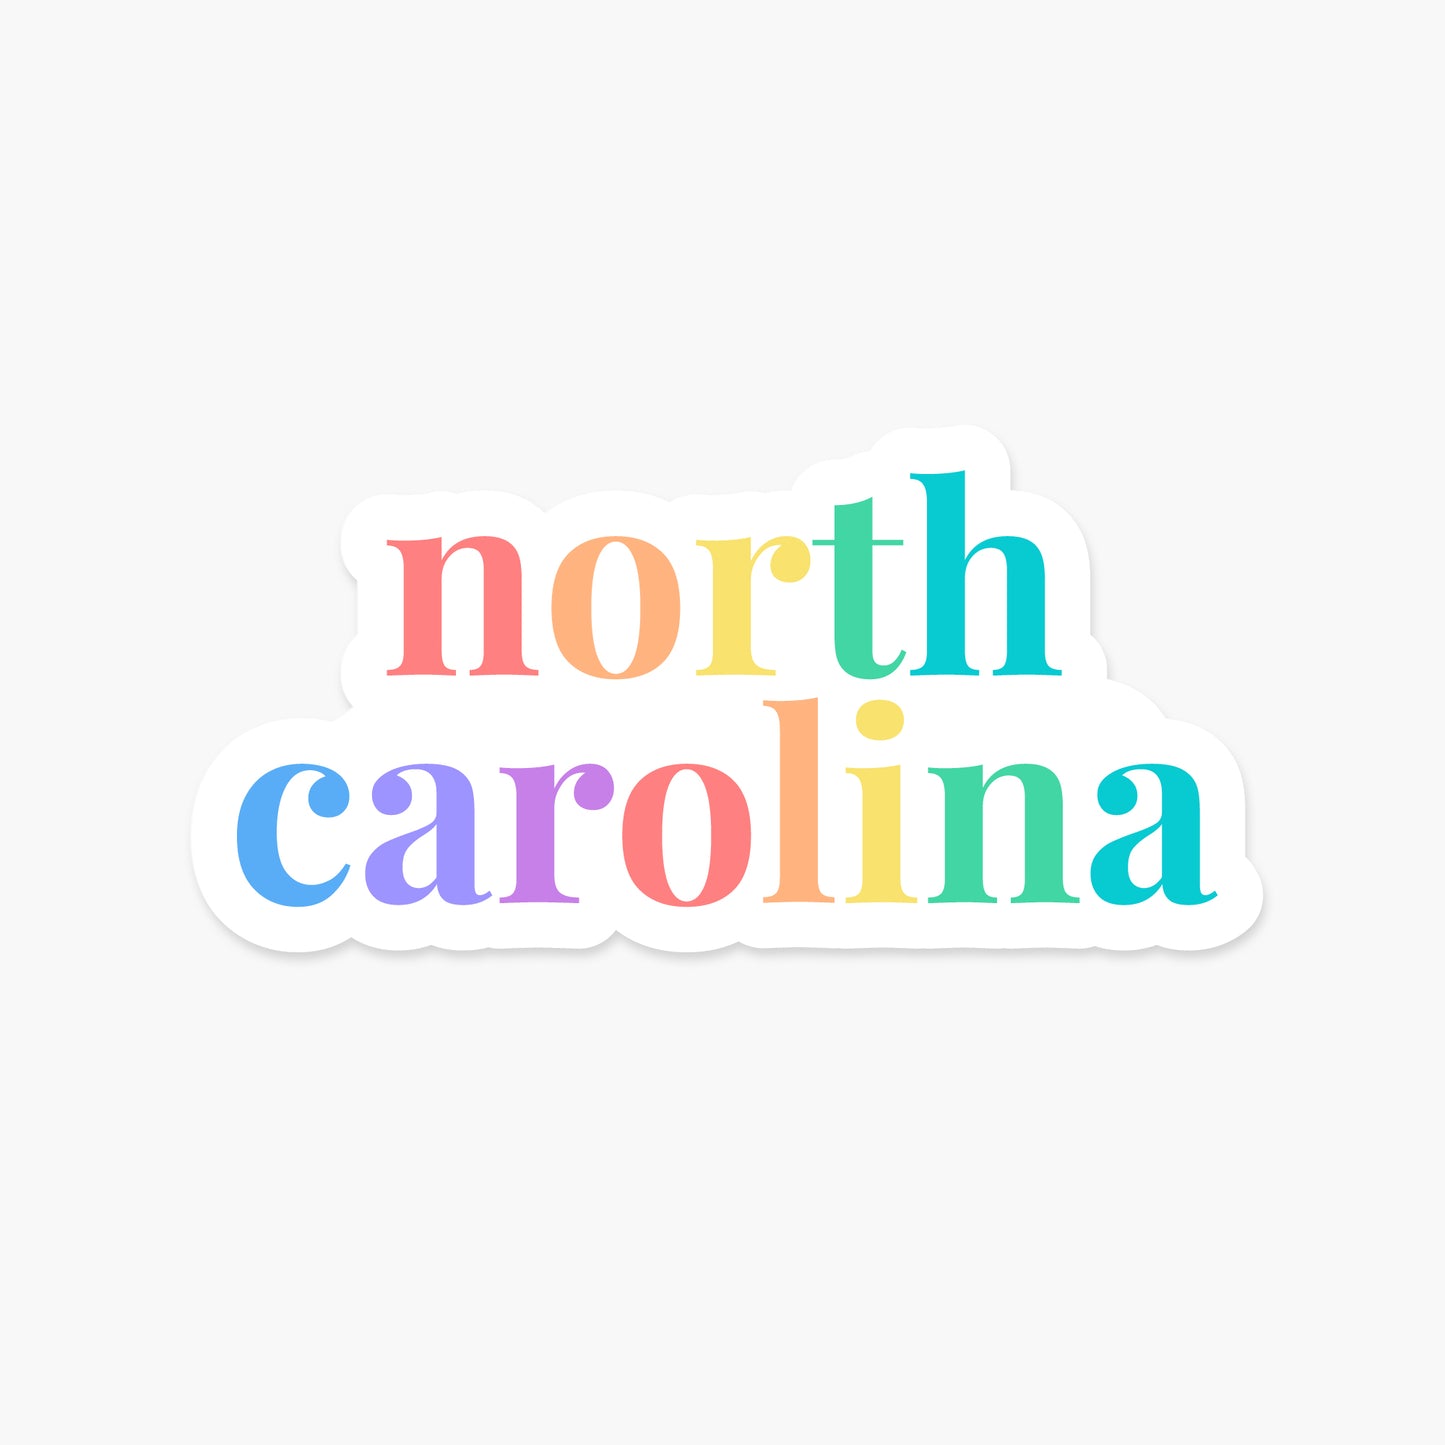 North Carolina US State - Everyday Sticker | Footnotes Paper